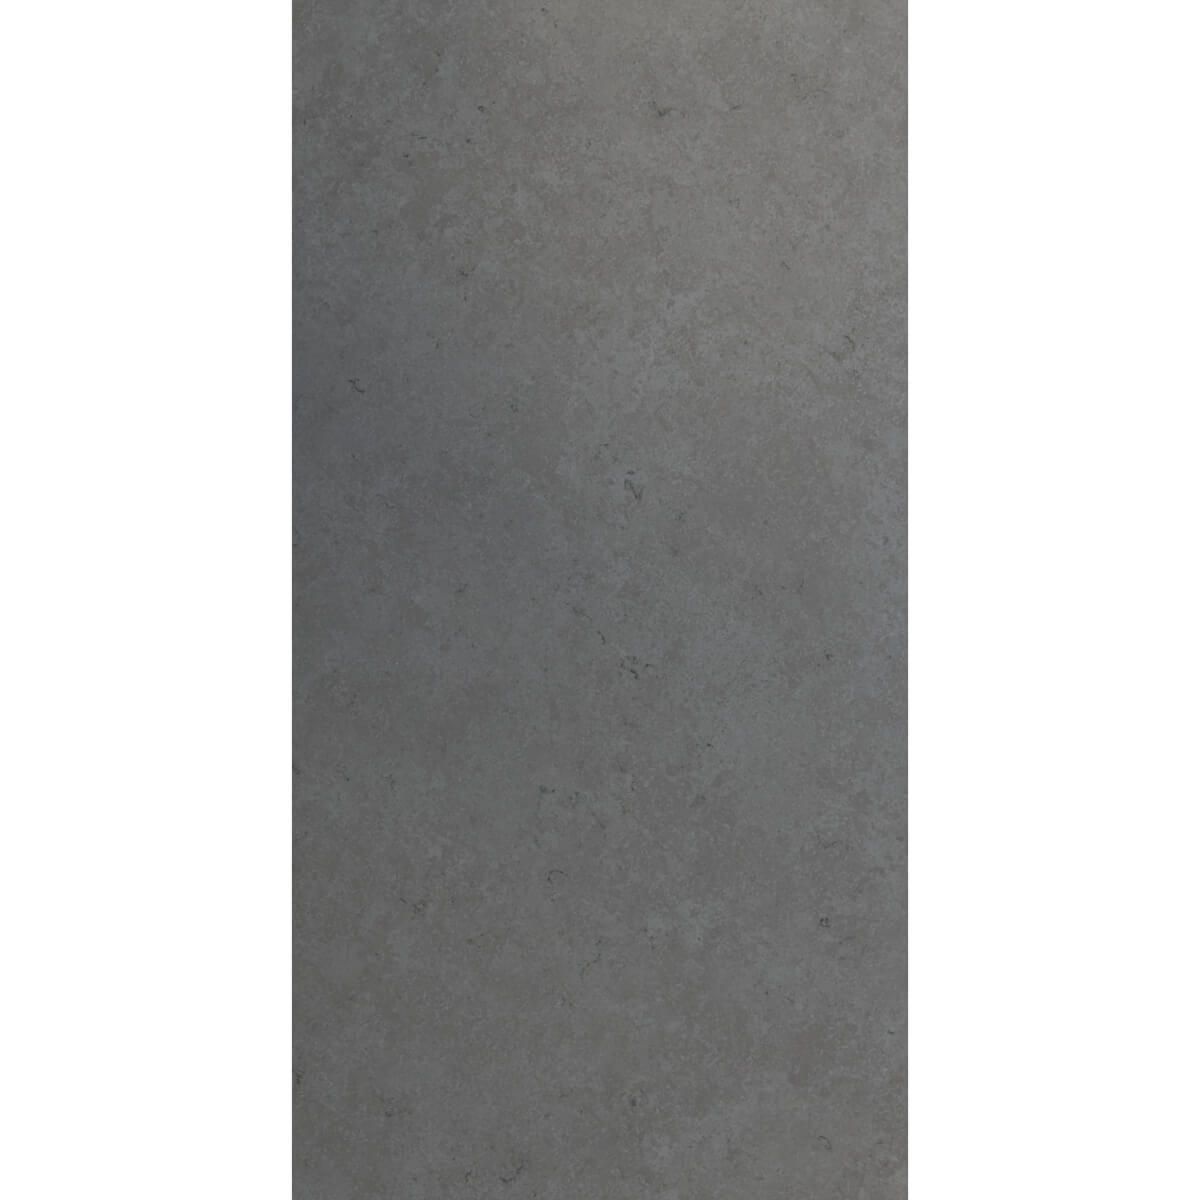 Gres Style New Anthracite 60x30x0,8 cm